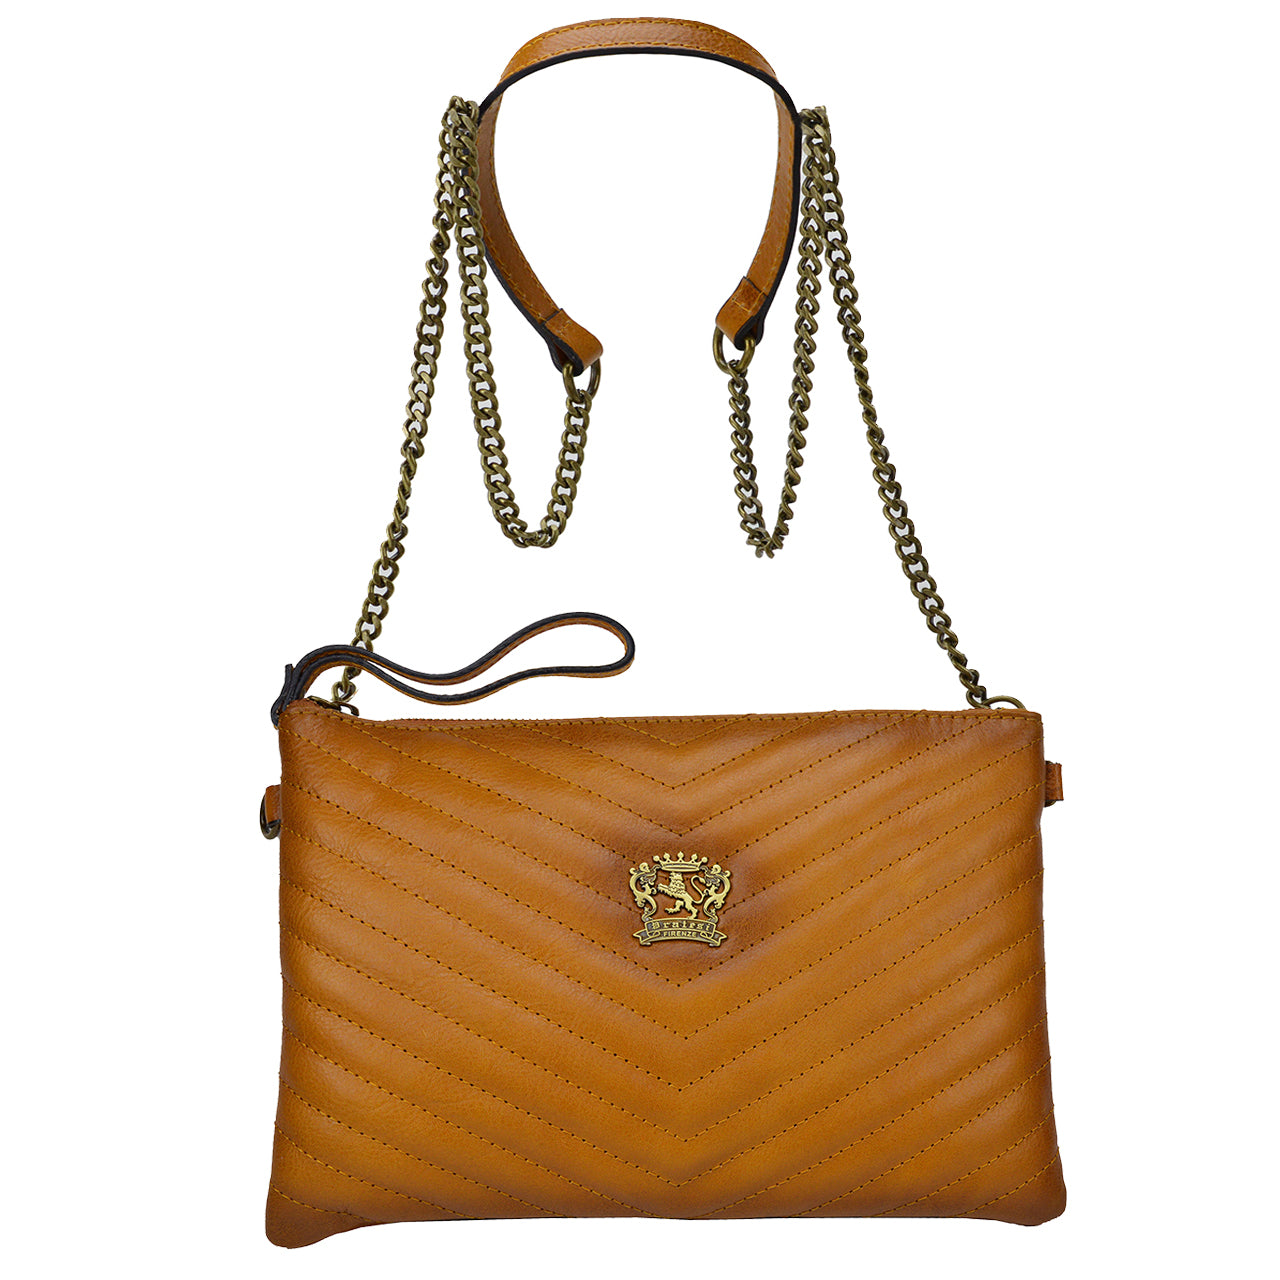 Pratesi Rufina Woman Bag in genuine Italian leather - Vegetable Tanned Italian Leather Cognac